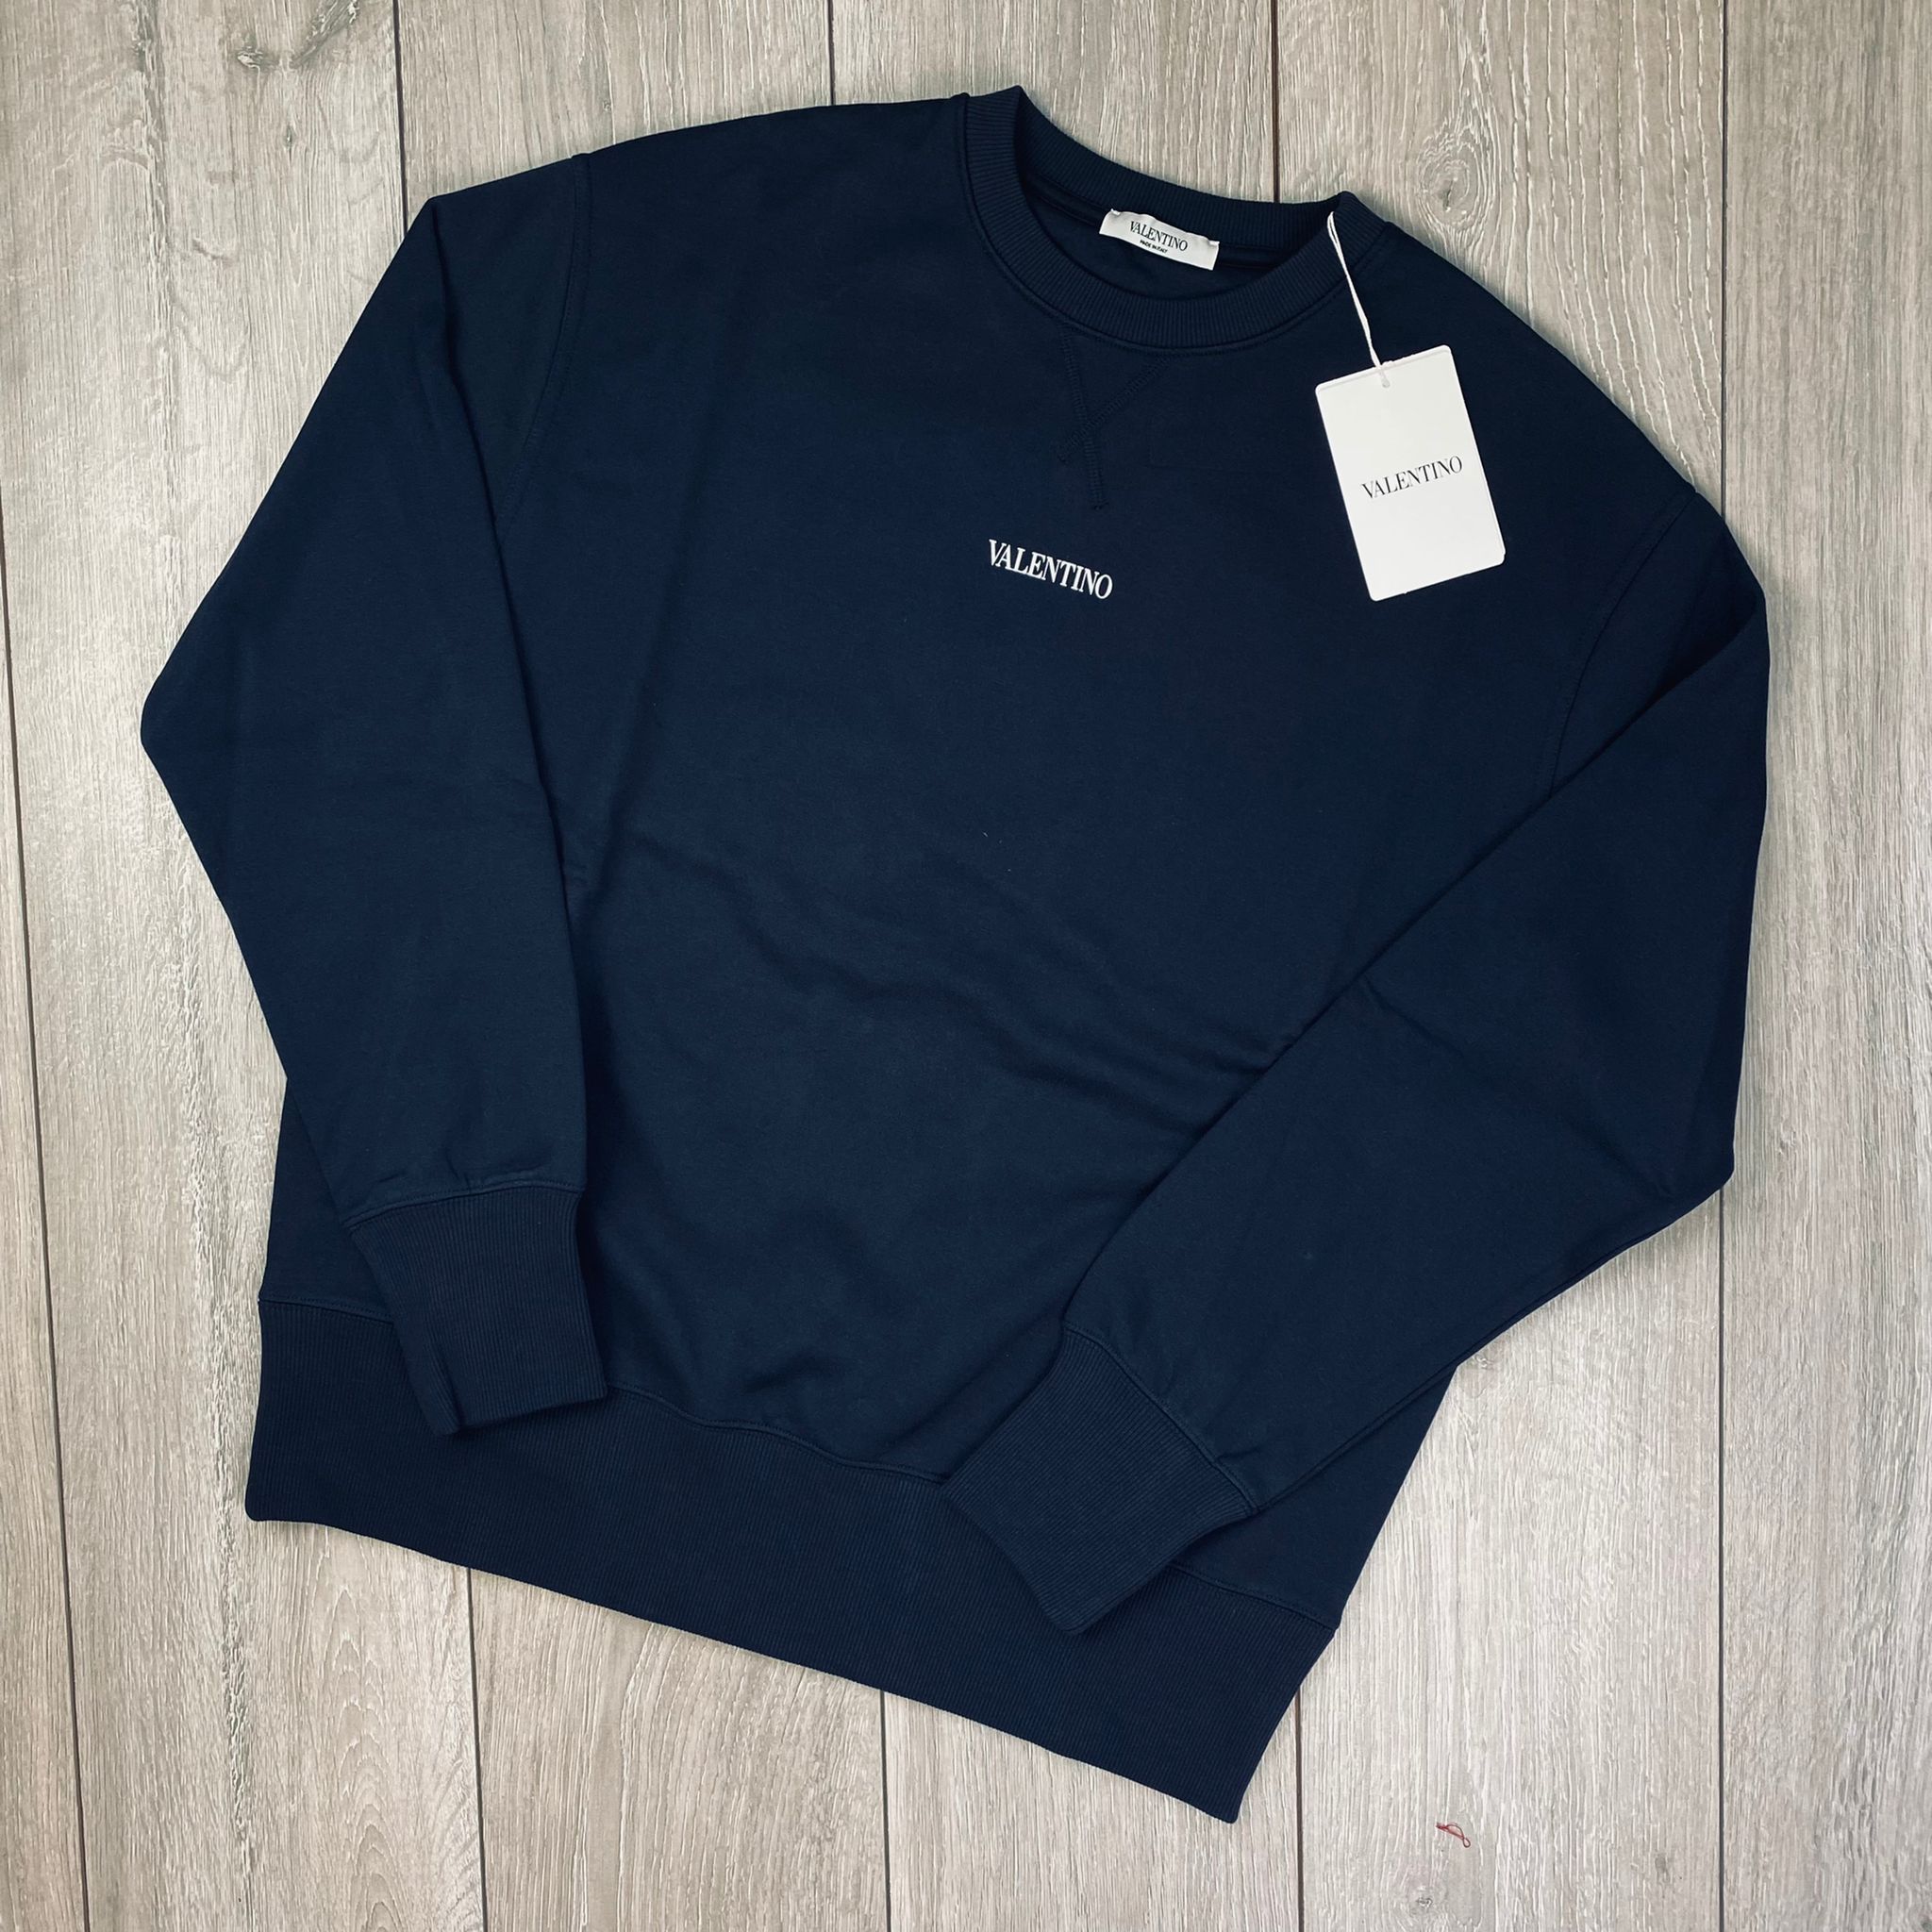 Valentino Printed Sweatshirt